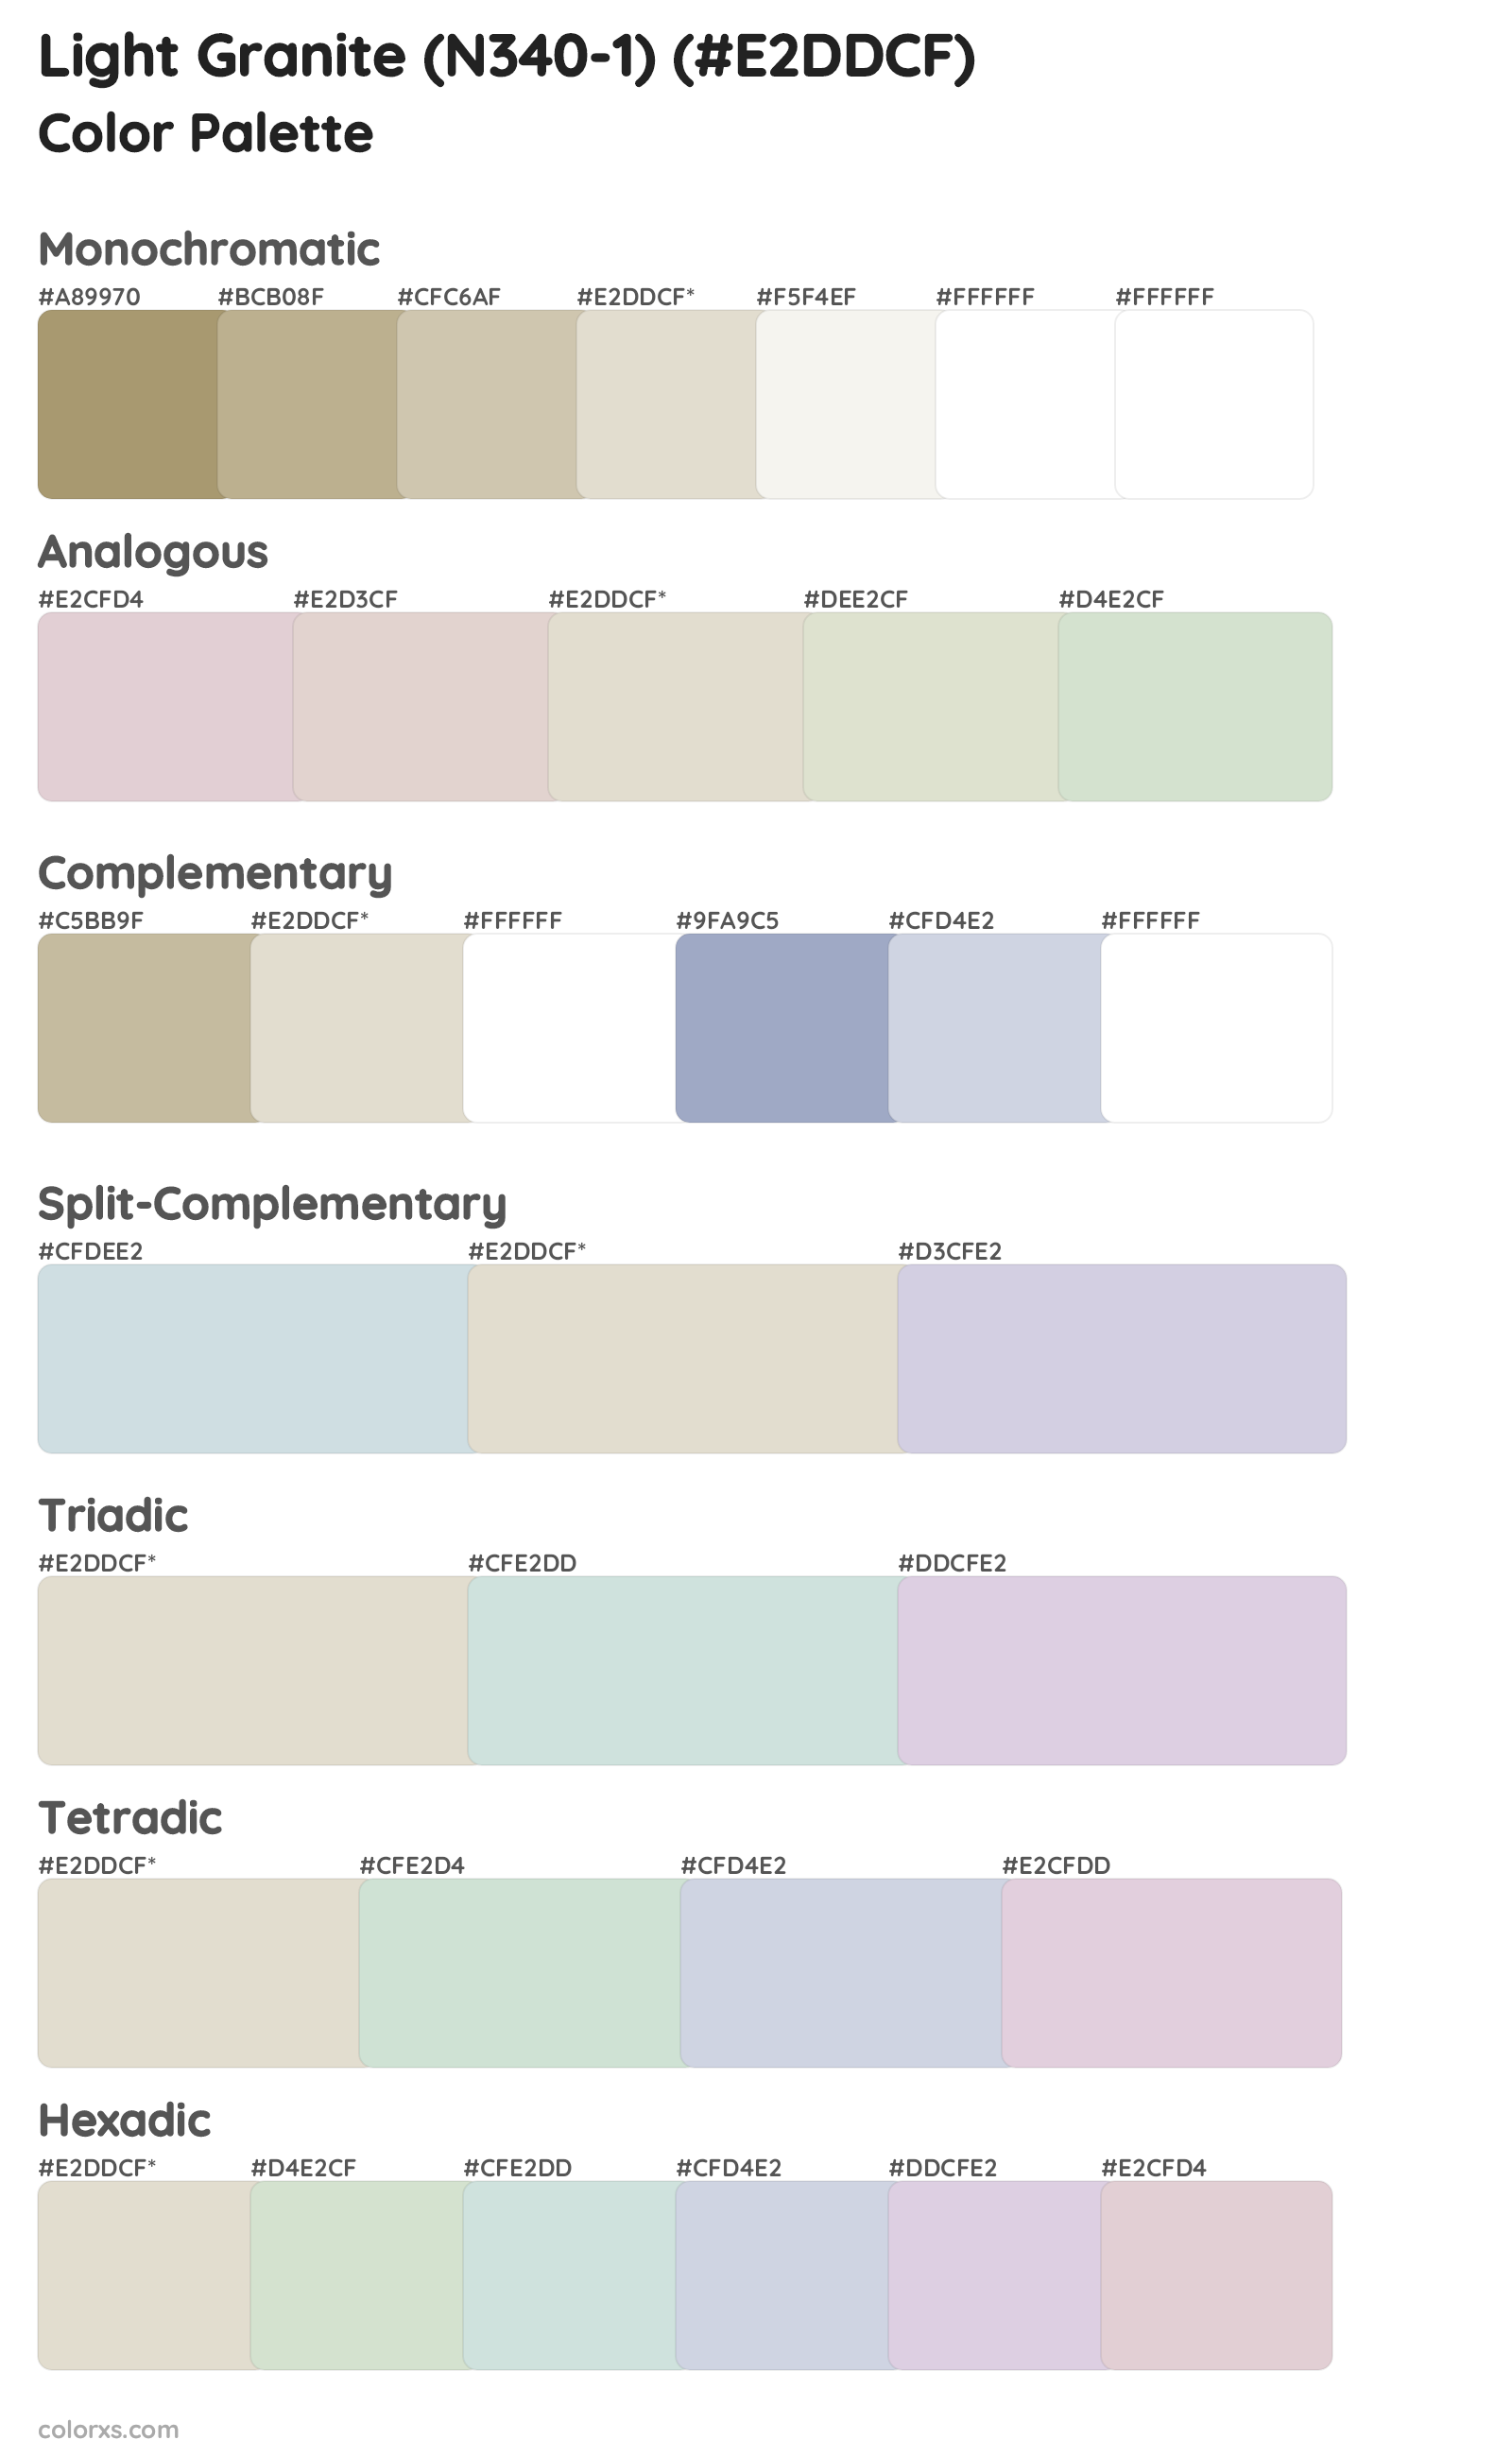 Light Granite (N340-1) Color Scheme Palettes